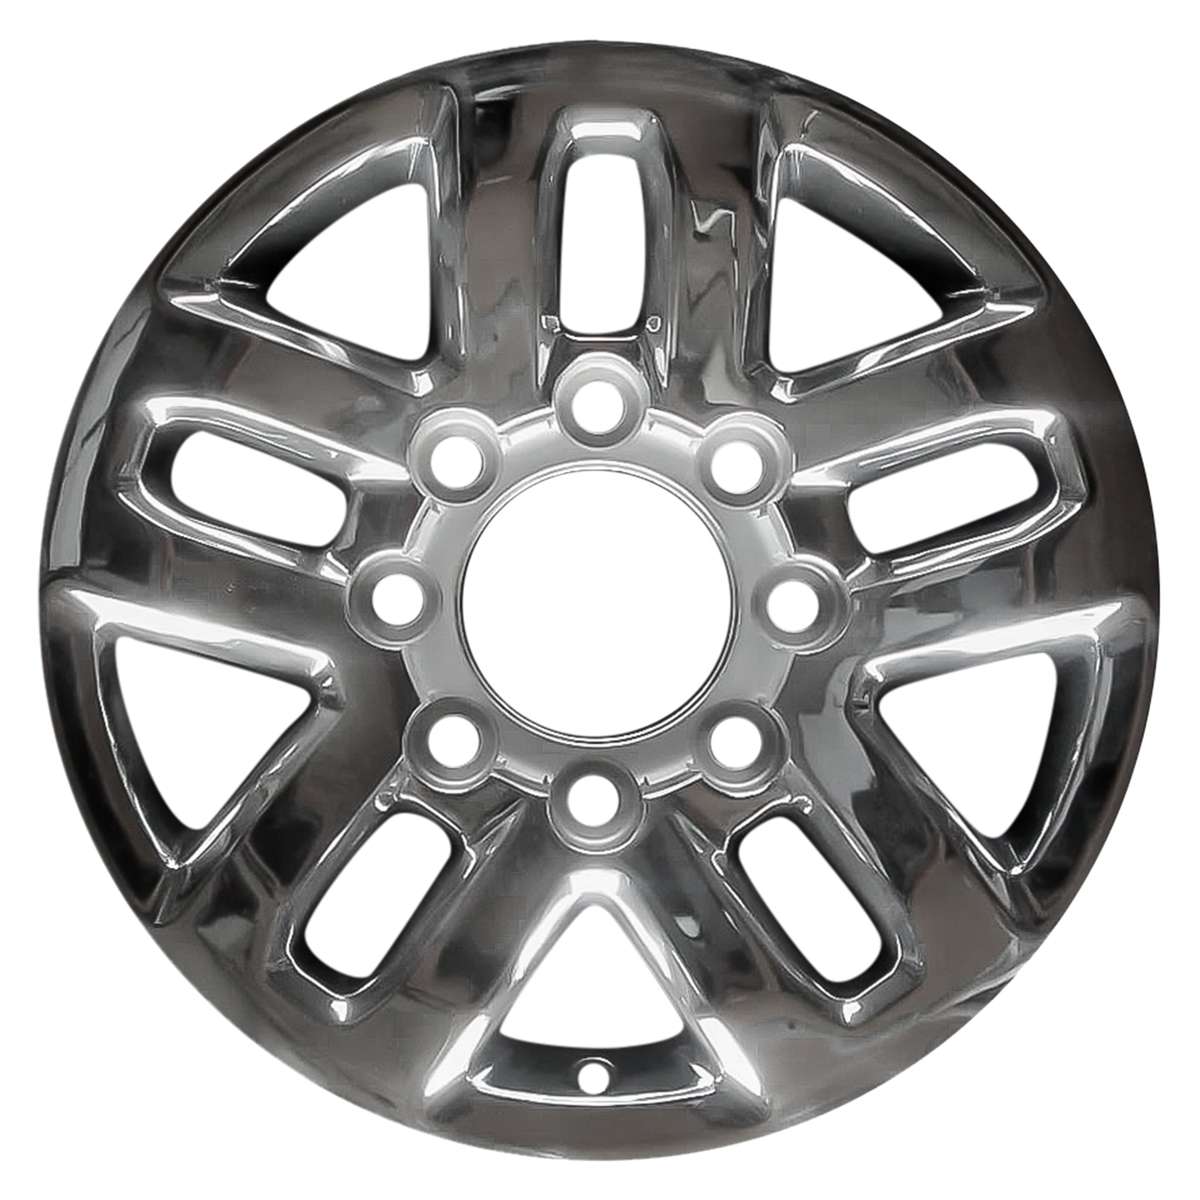 2019 Chevrolet Suburban 3500 18" OEM Wheel Rim W5709CHR